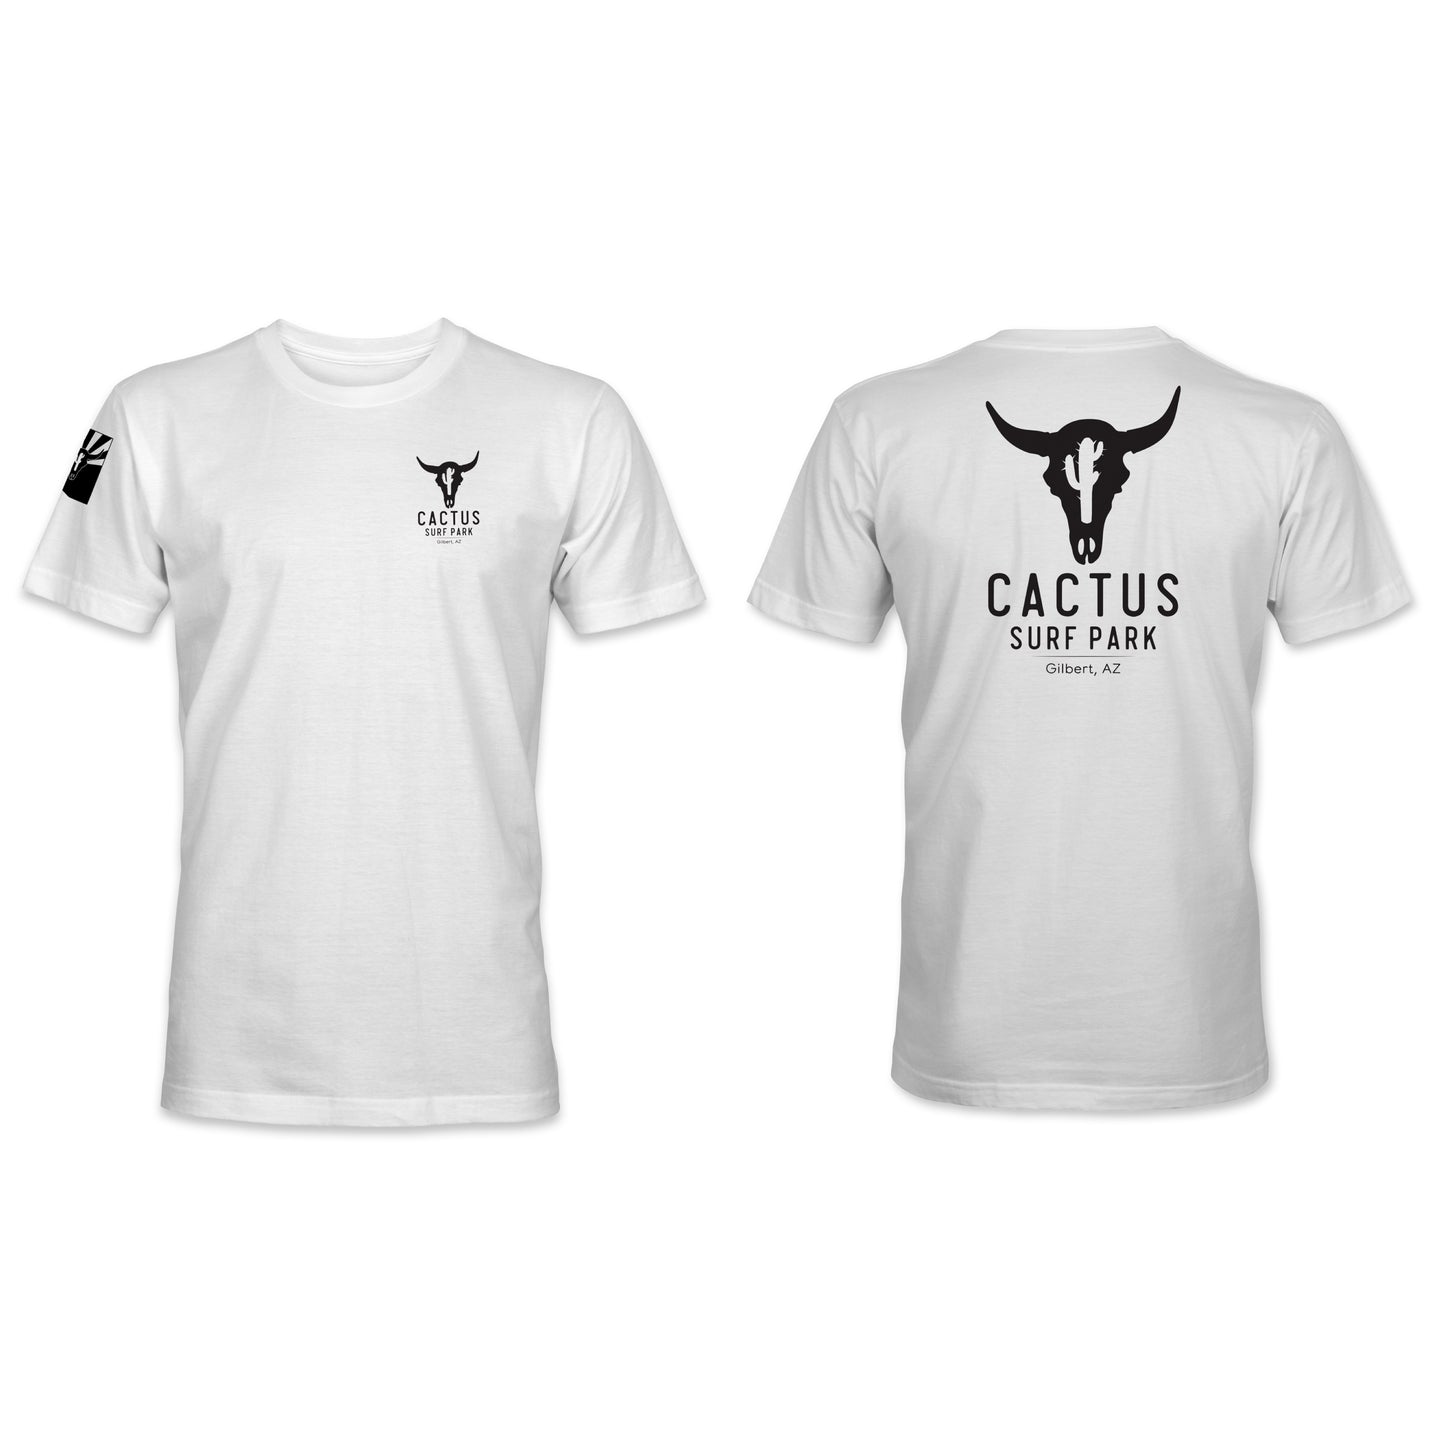 Cactus Surf Park ICON Men's & Youth S/S T-Shirt - White / Black